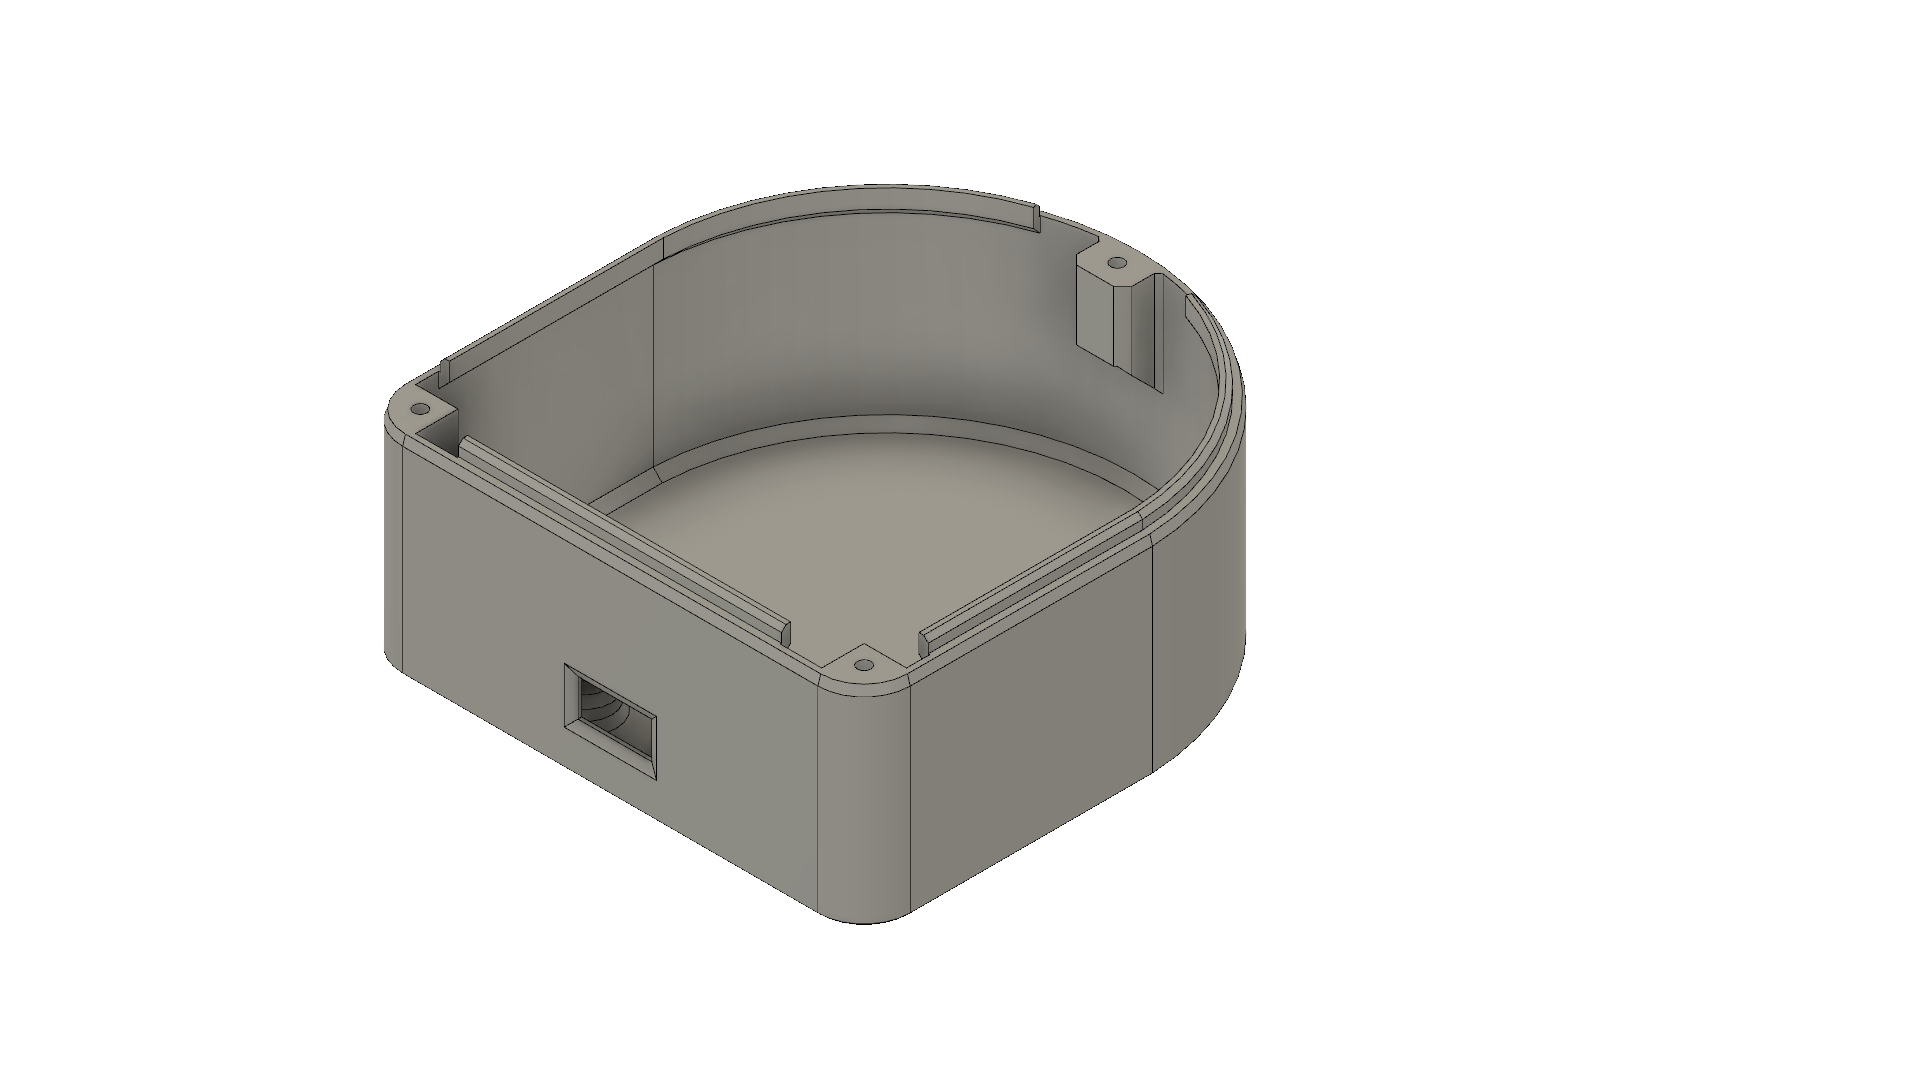 3D model of the buzzer case